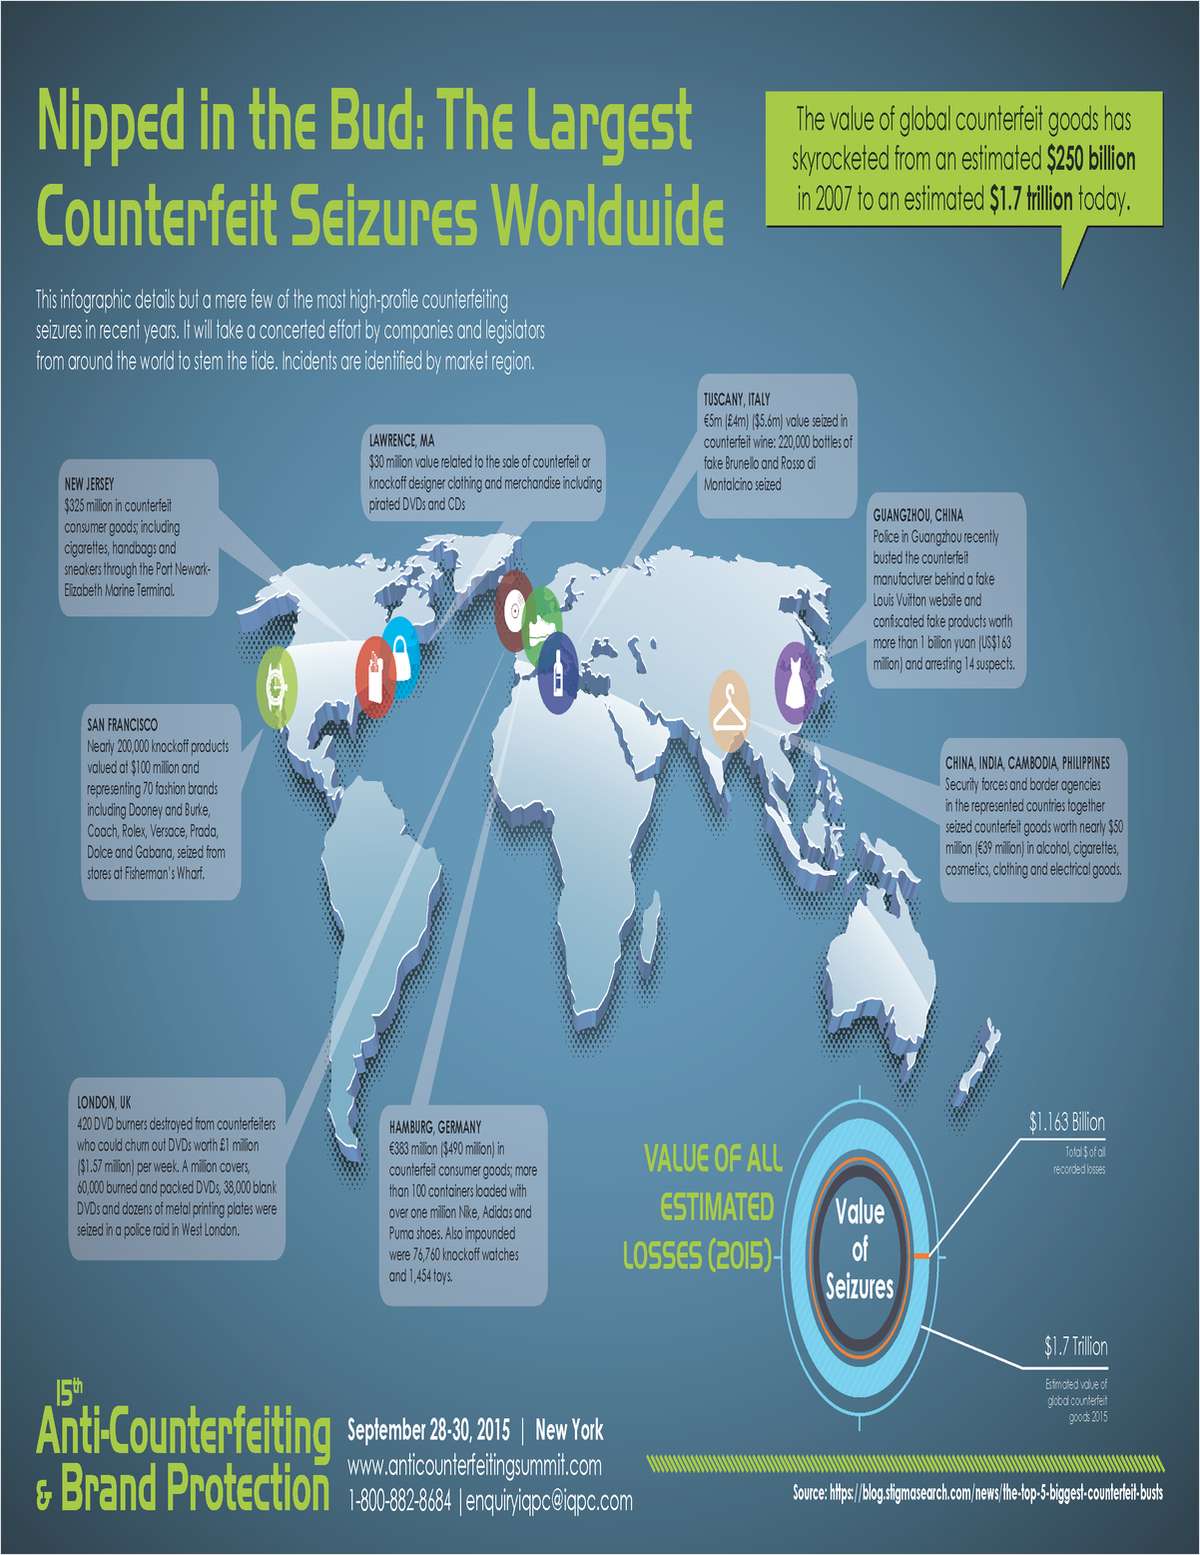 The Largest Counterfeit Seizures Worldwide